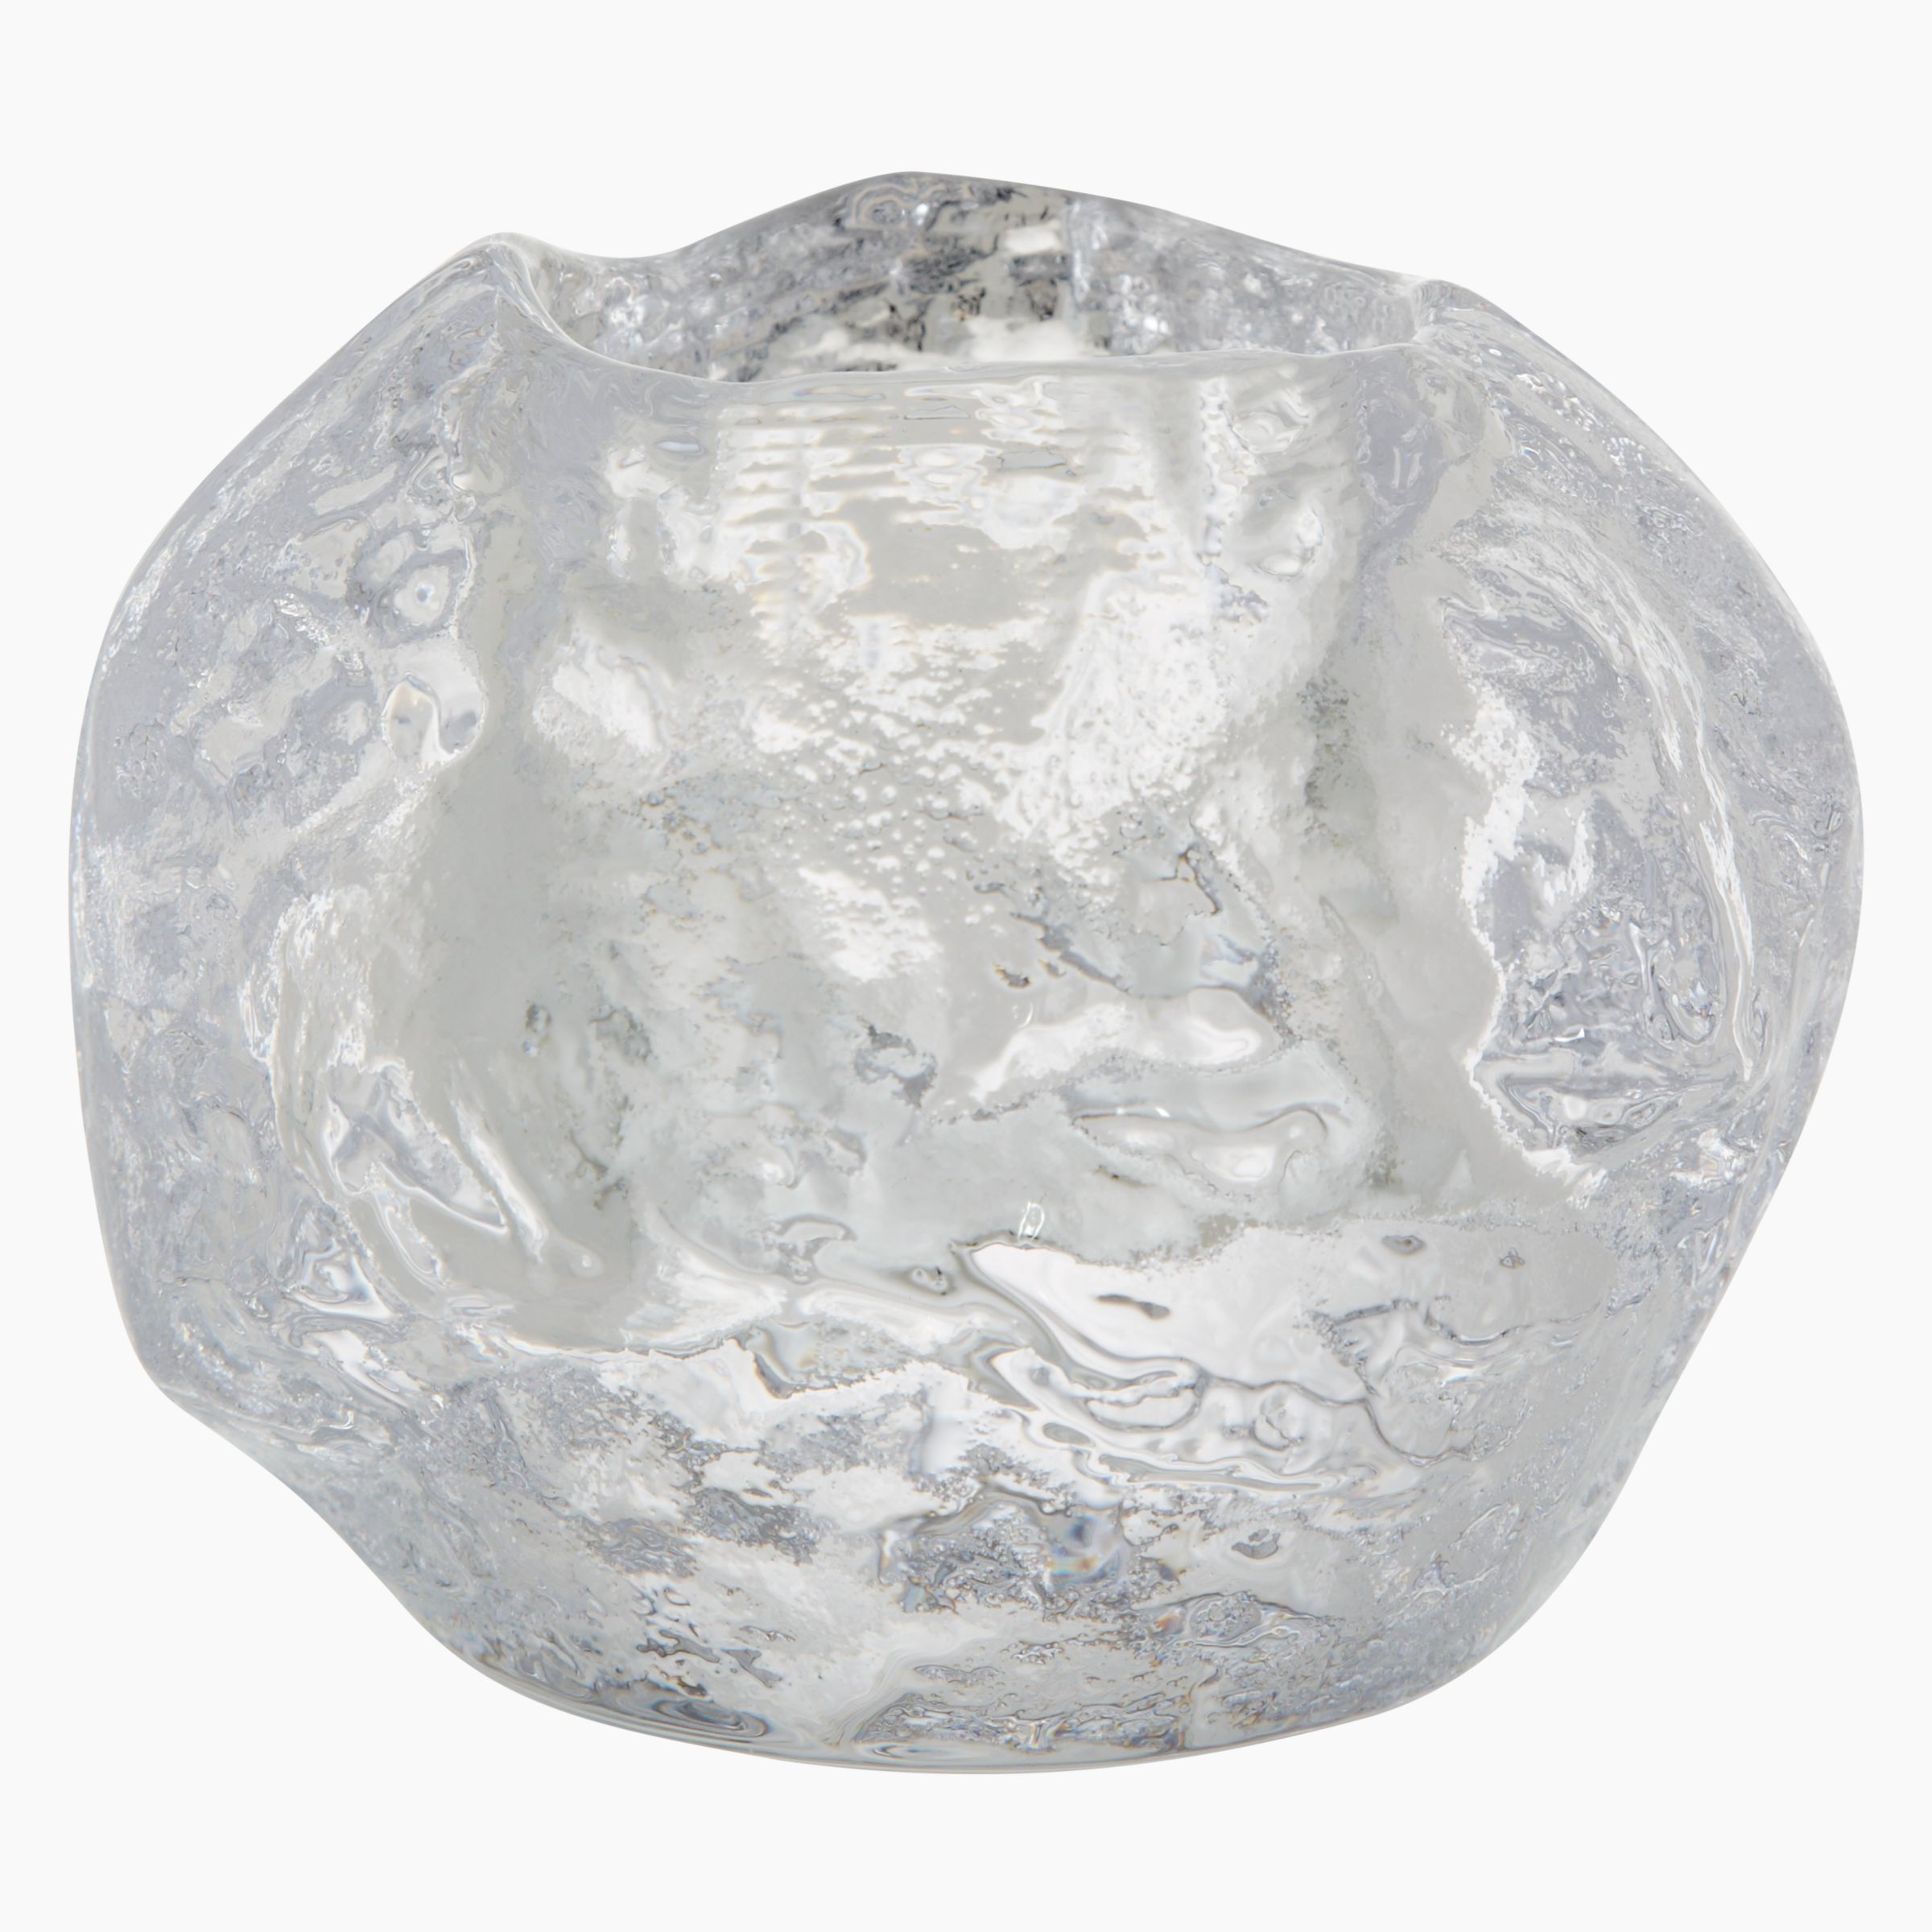 Kosta Boda Snowball Tealight Holder 180170